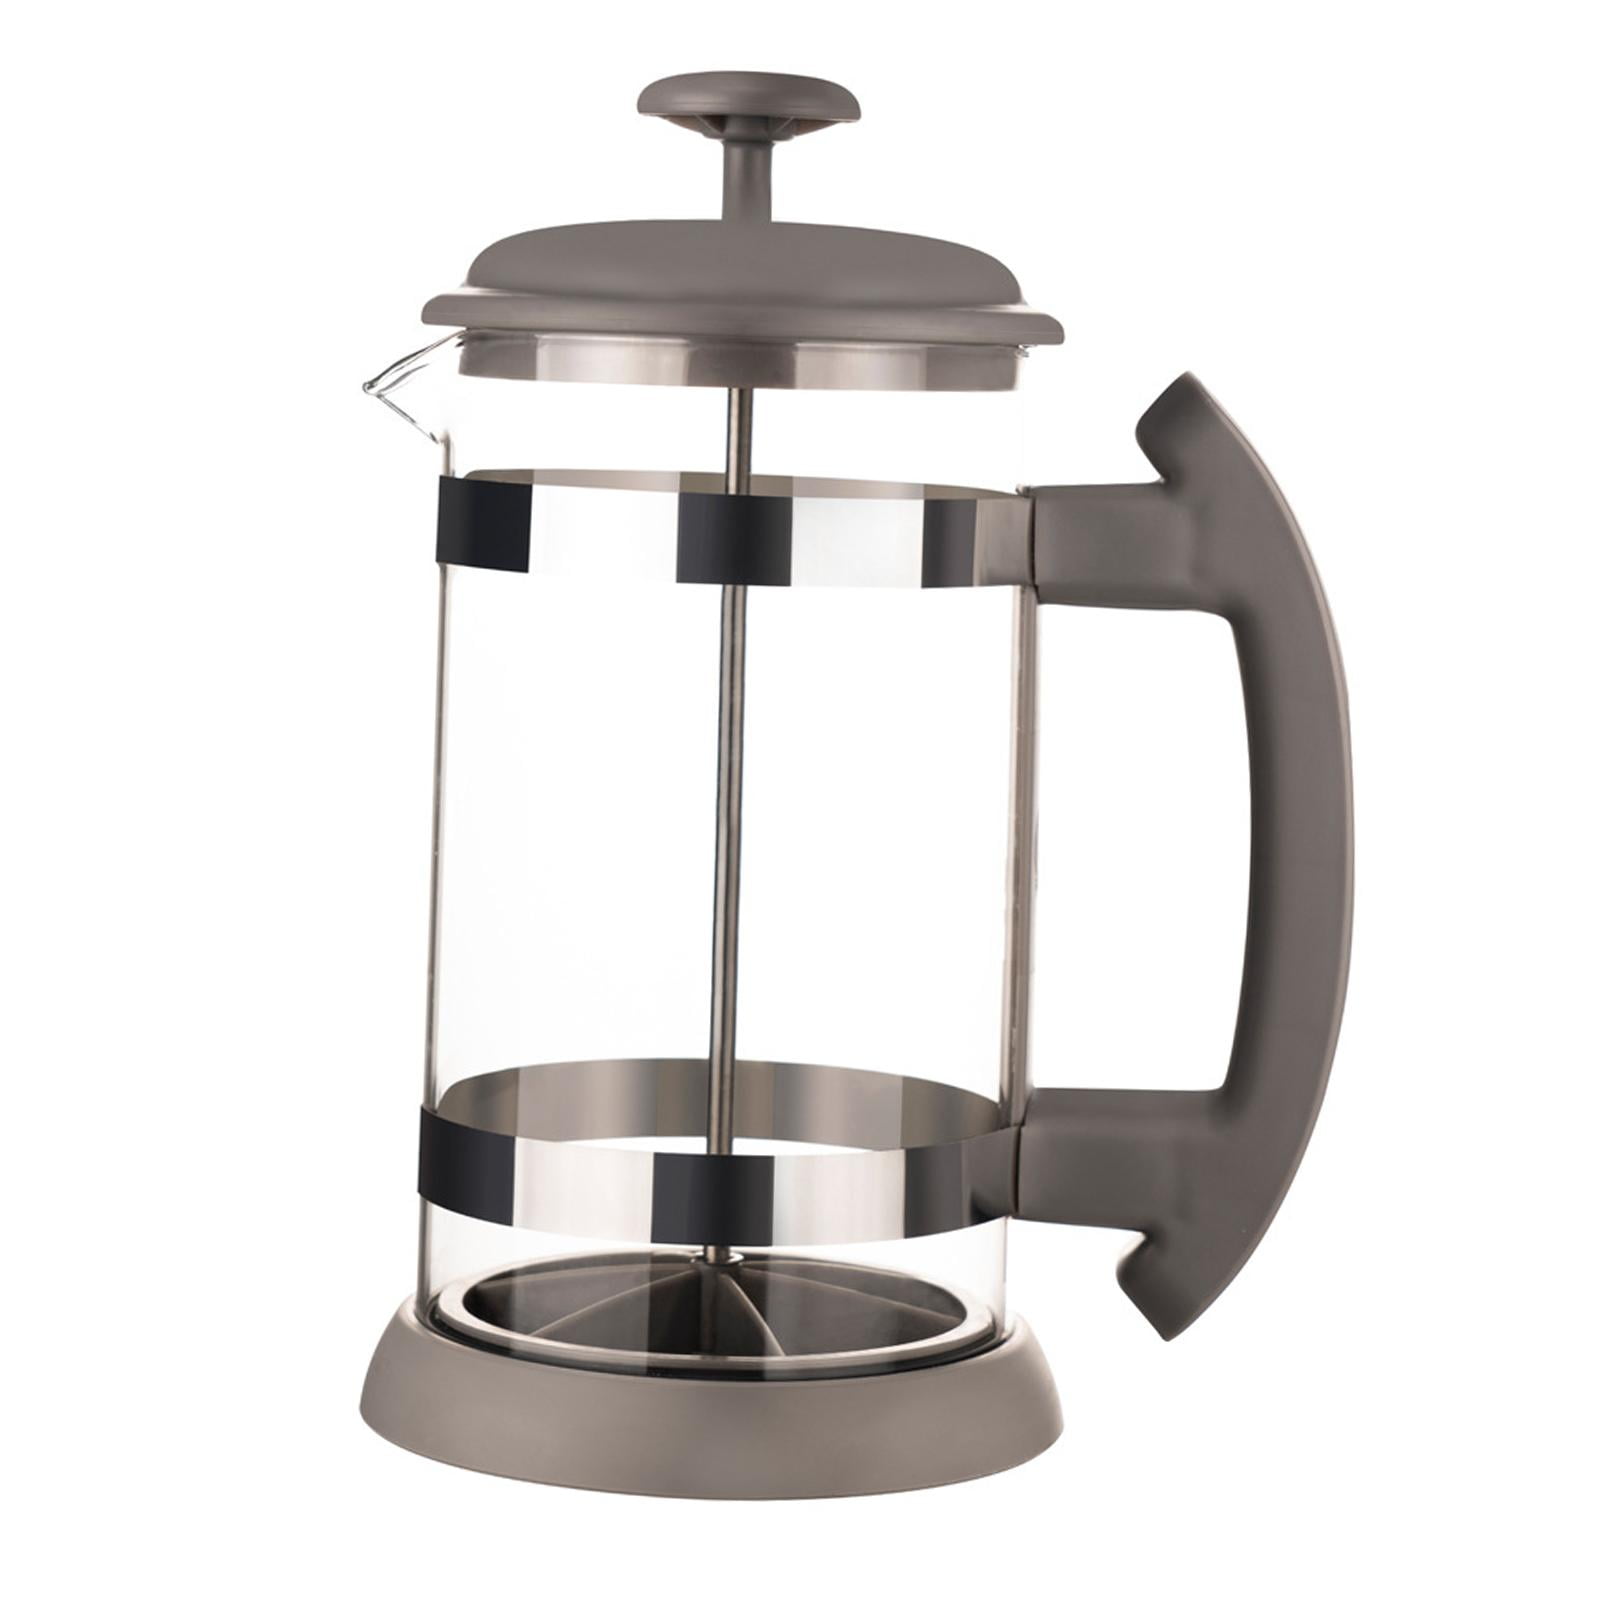 French Press Coffee Maker Tea Coffee Pot Aeropress Copo Stanley